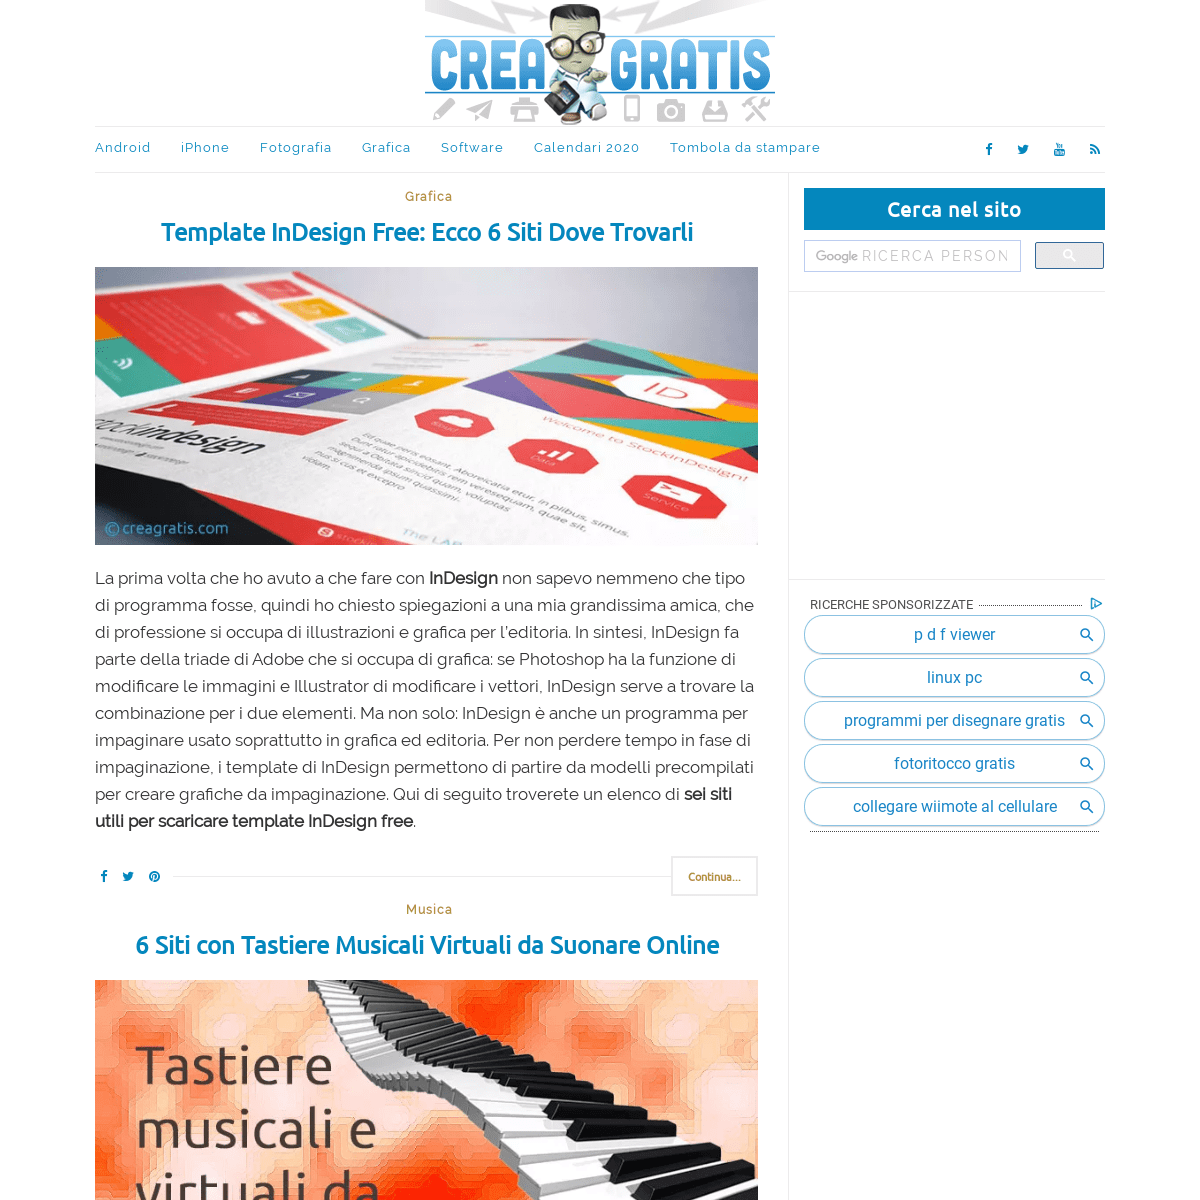 A complete backup of creagratis.com